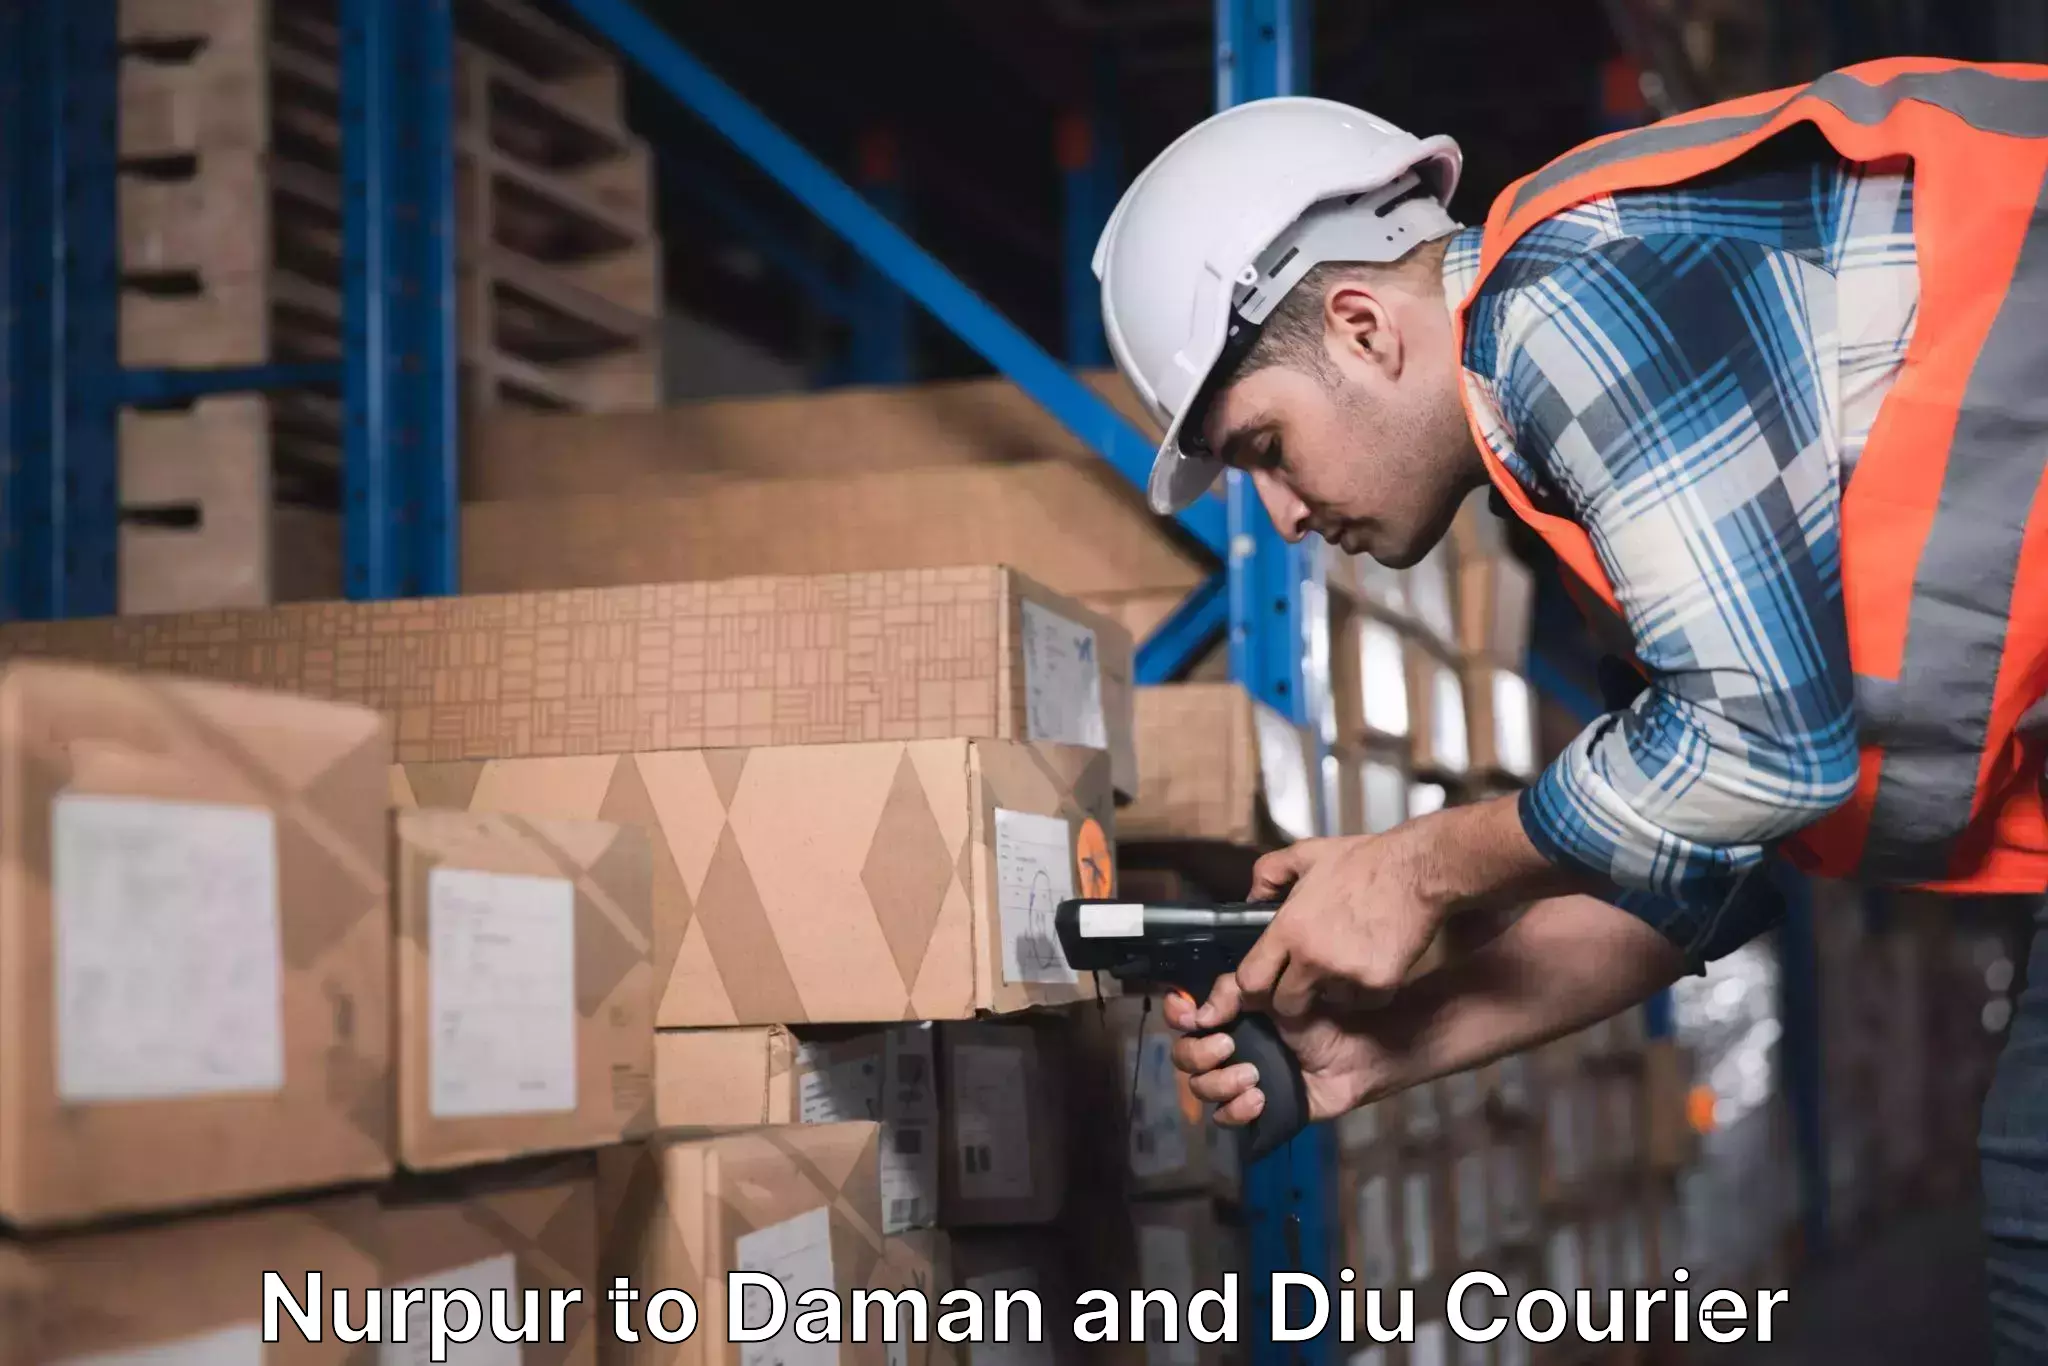 Courier service comparison Nurpur to Daman and Diu